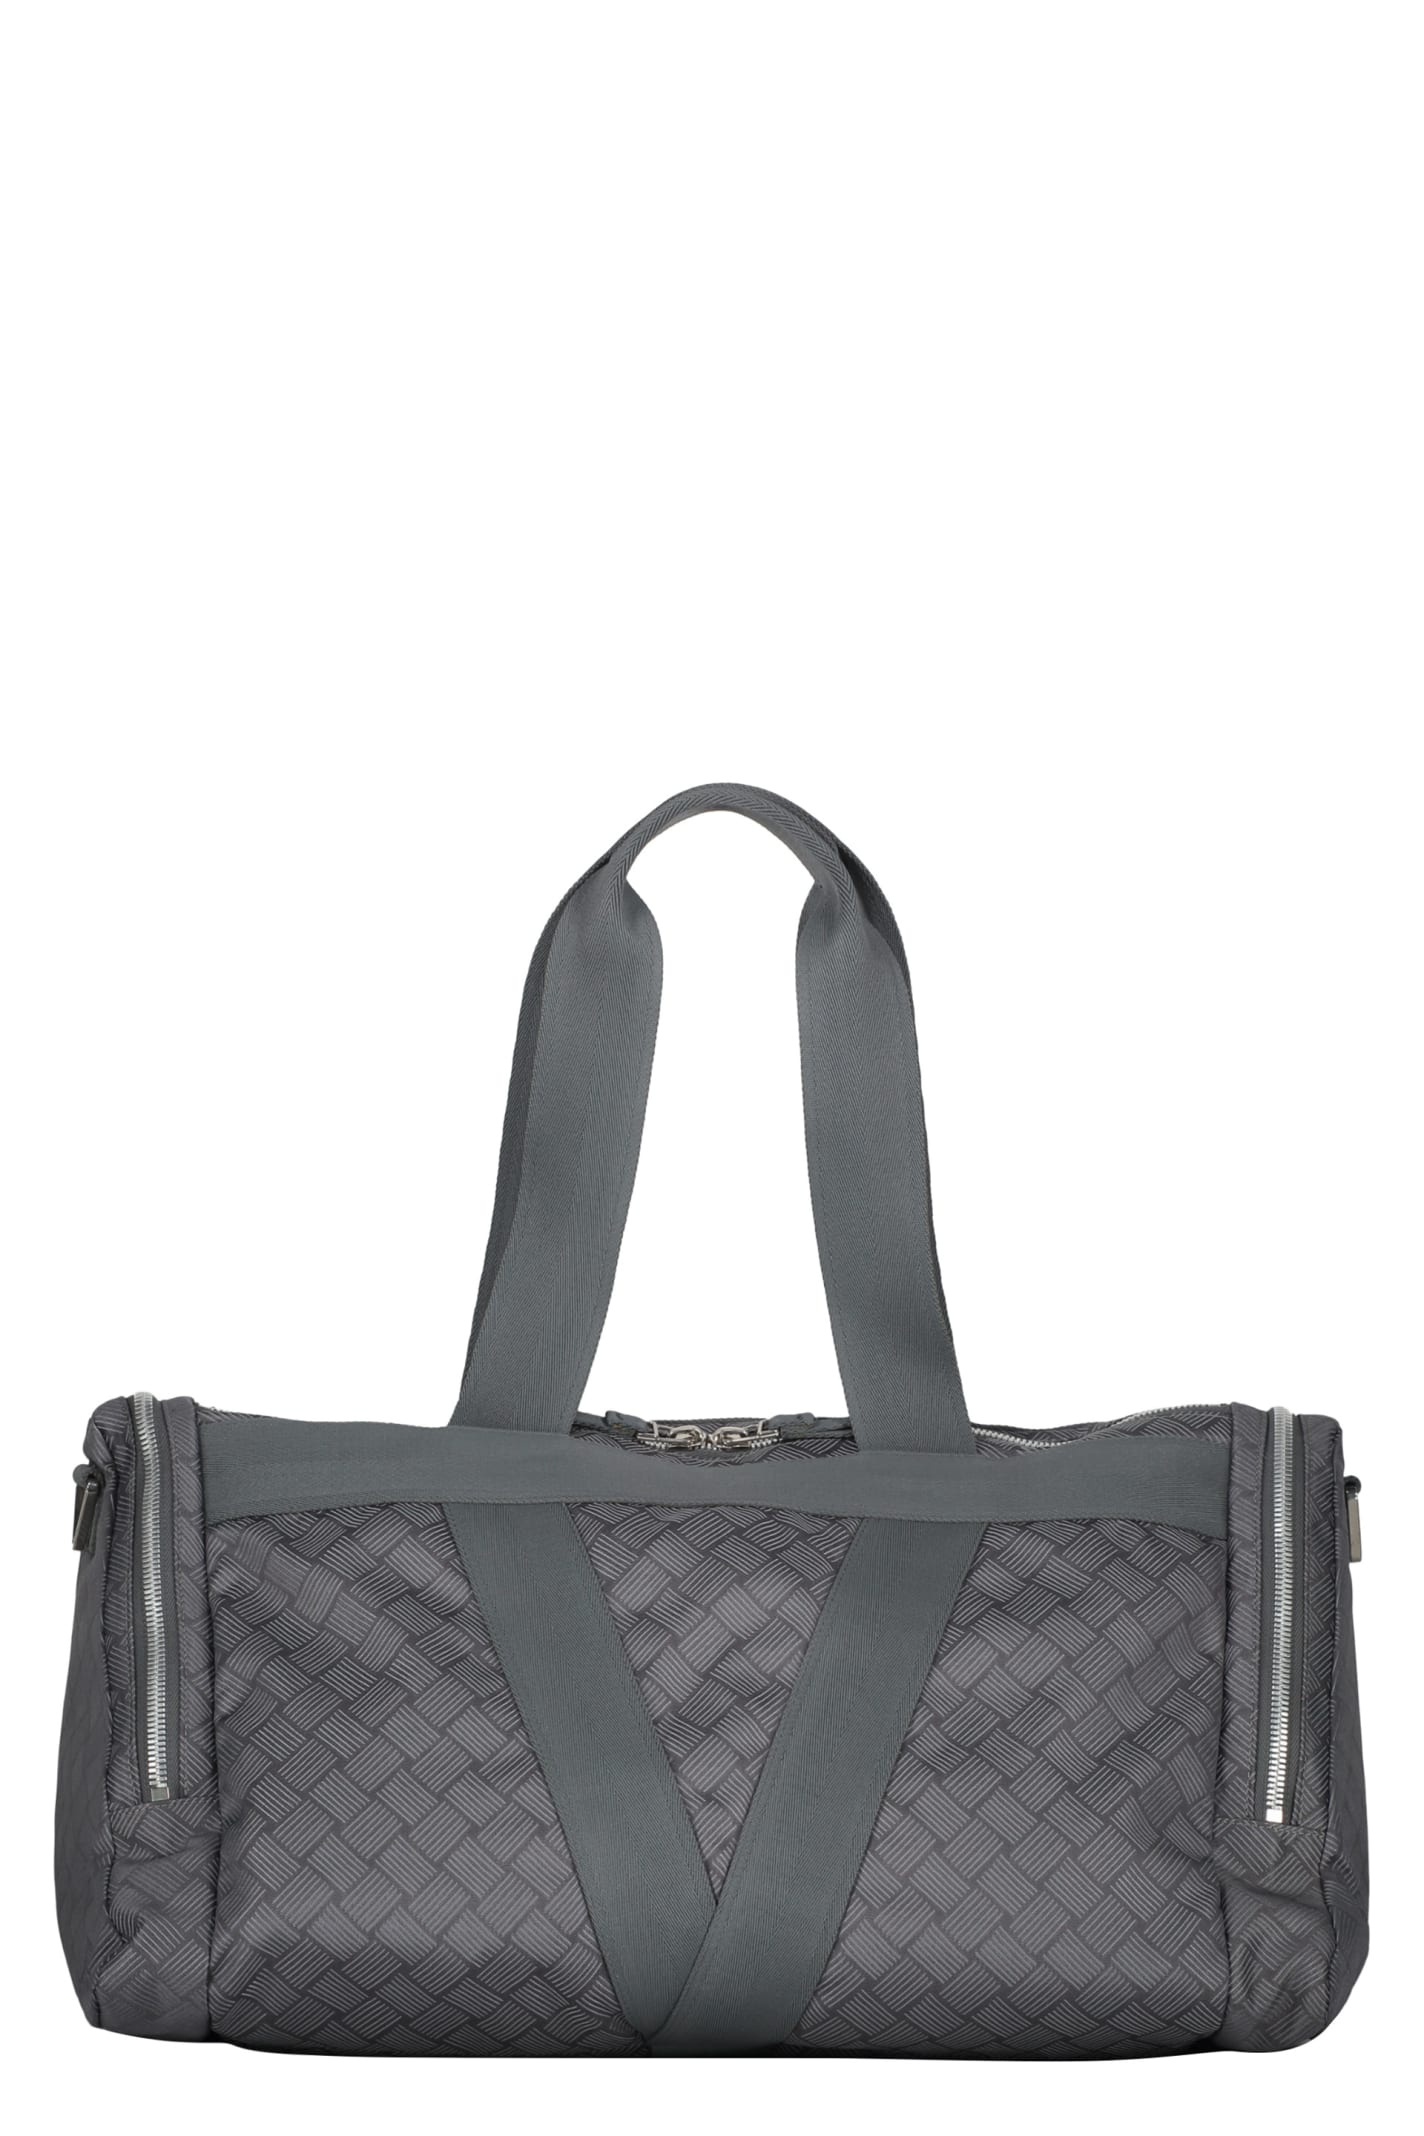 Bottega Veneta Travel Bag